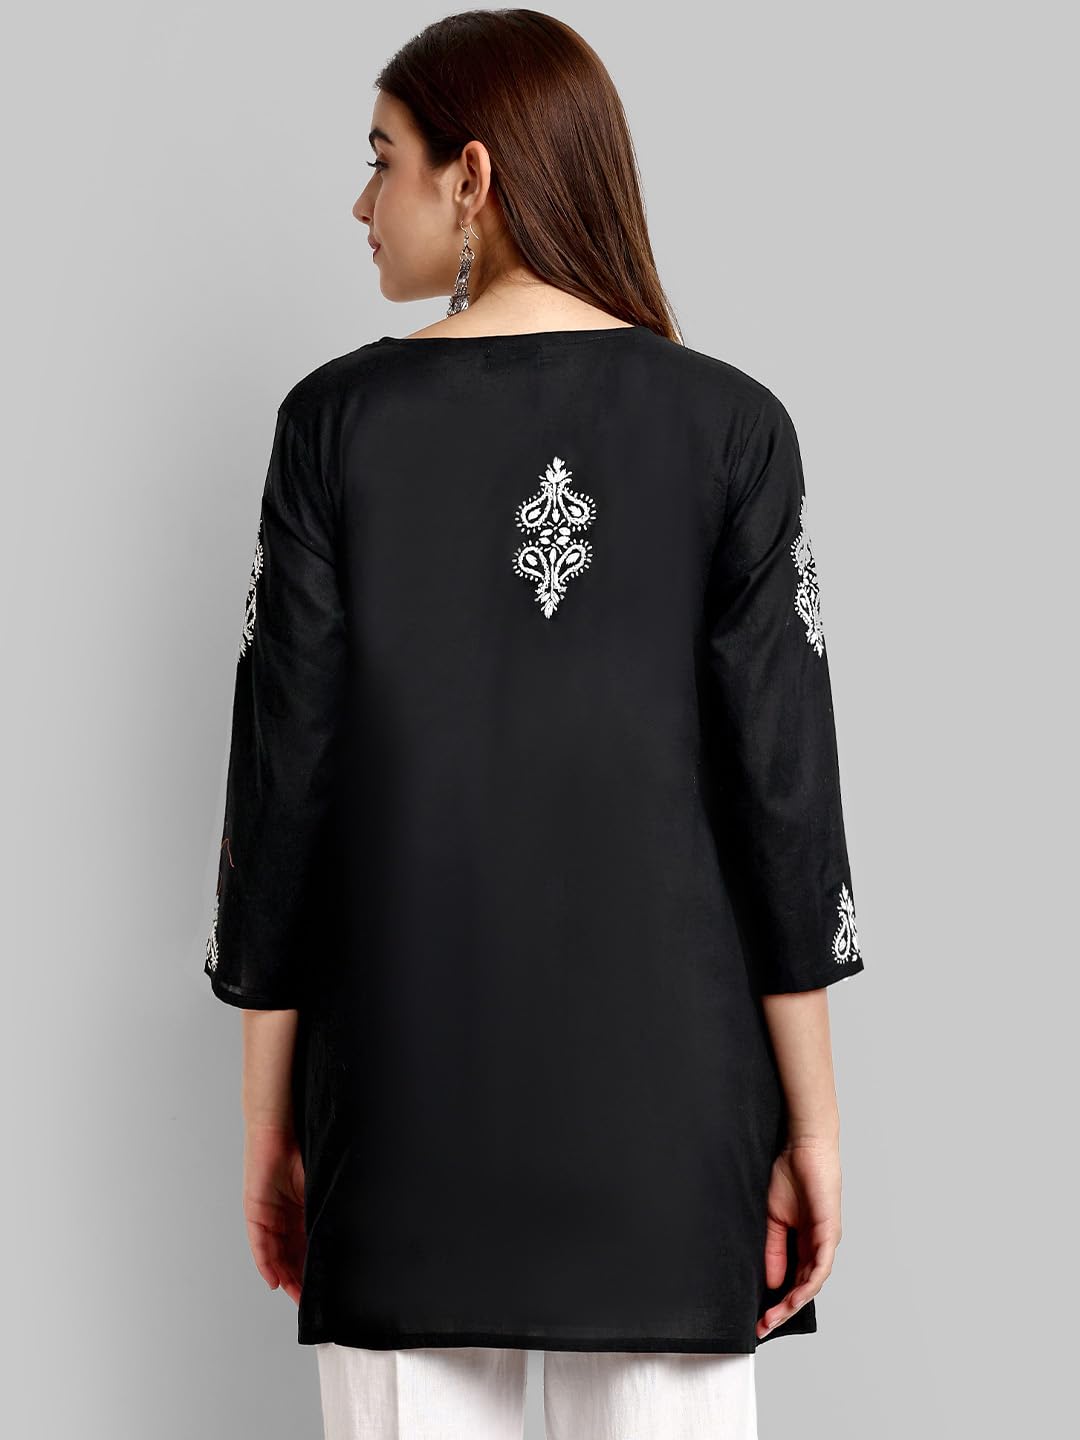 Ada Hand Embroidered Lucknowi Chikankari A-line Cotton Short Kurti Top for Women A911376 Black/White (L)